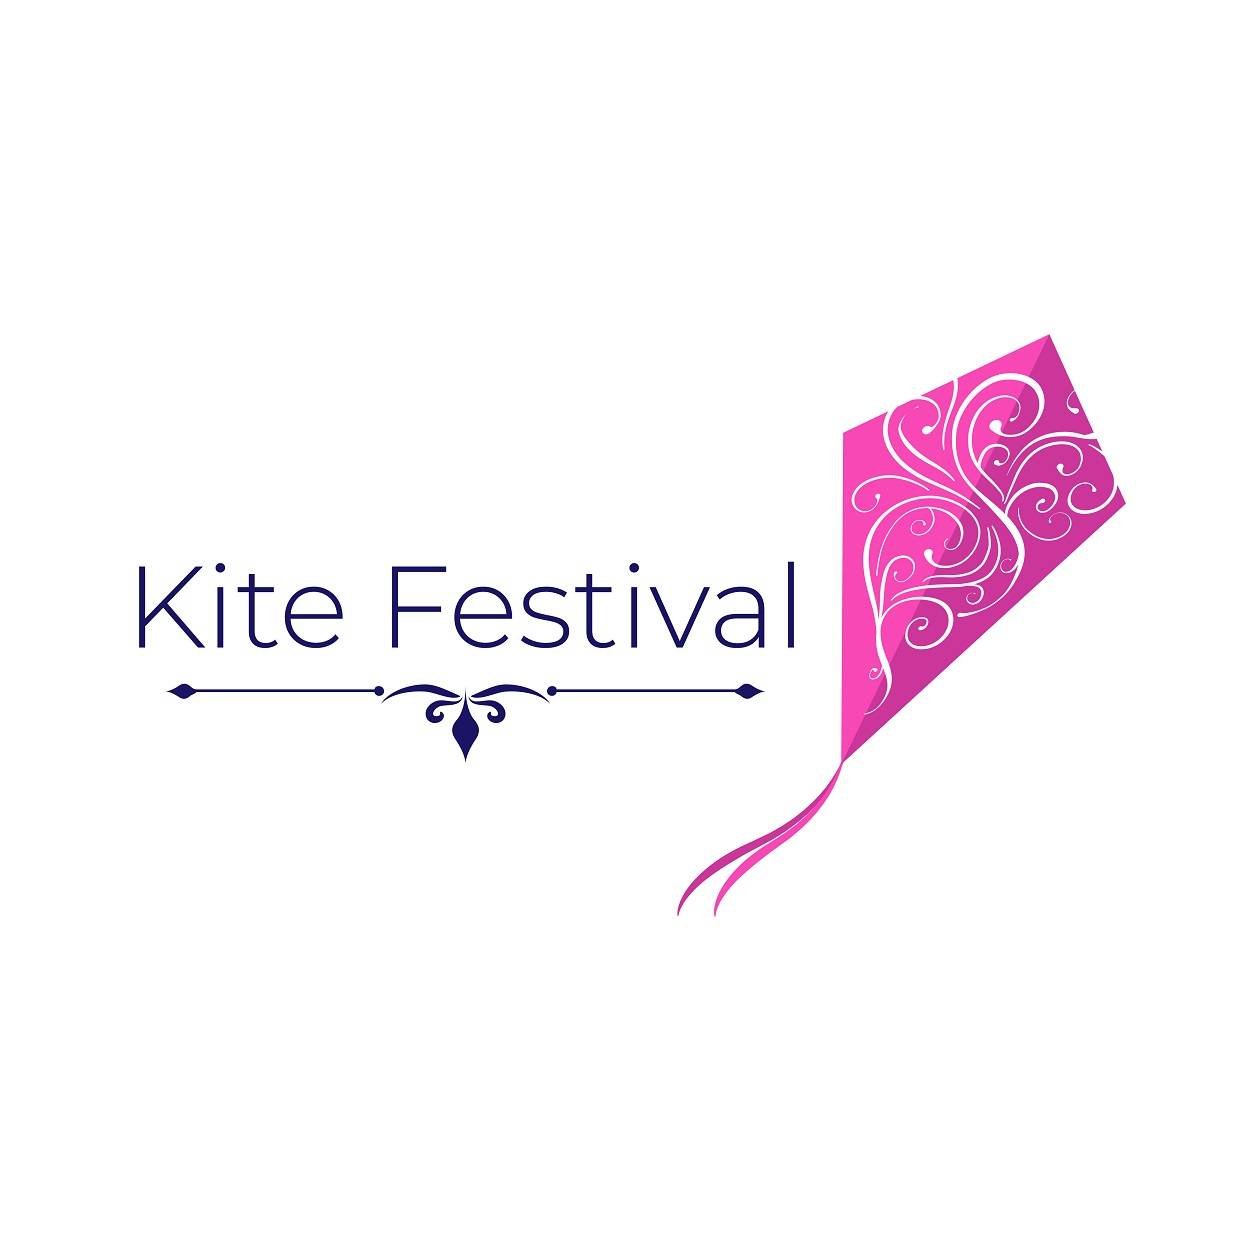 Kite festival logo with ornaments